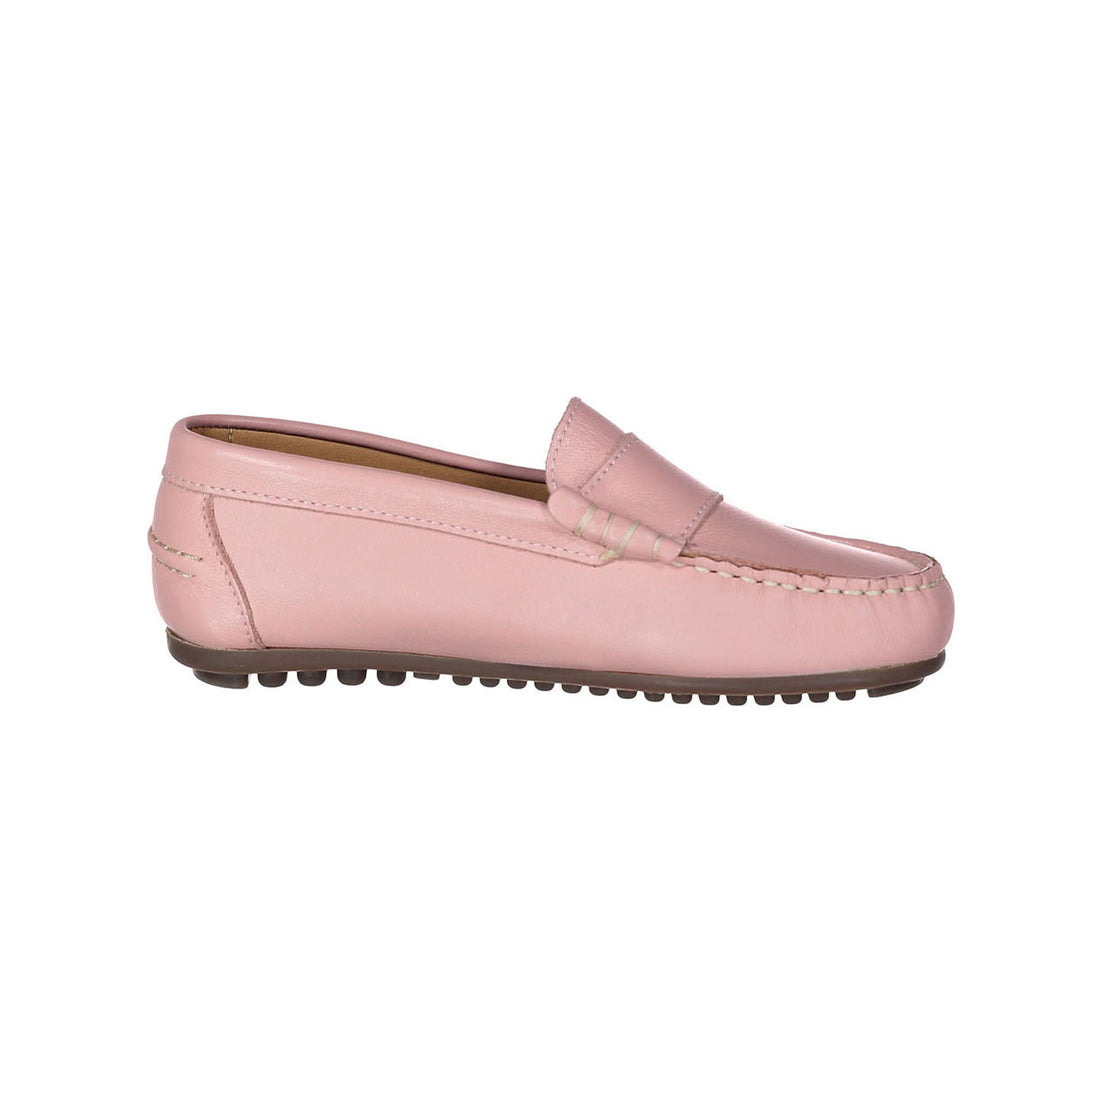 Ladida Light Pink Leather Loafer